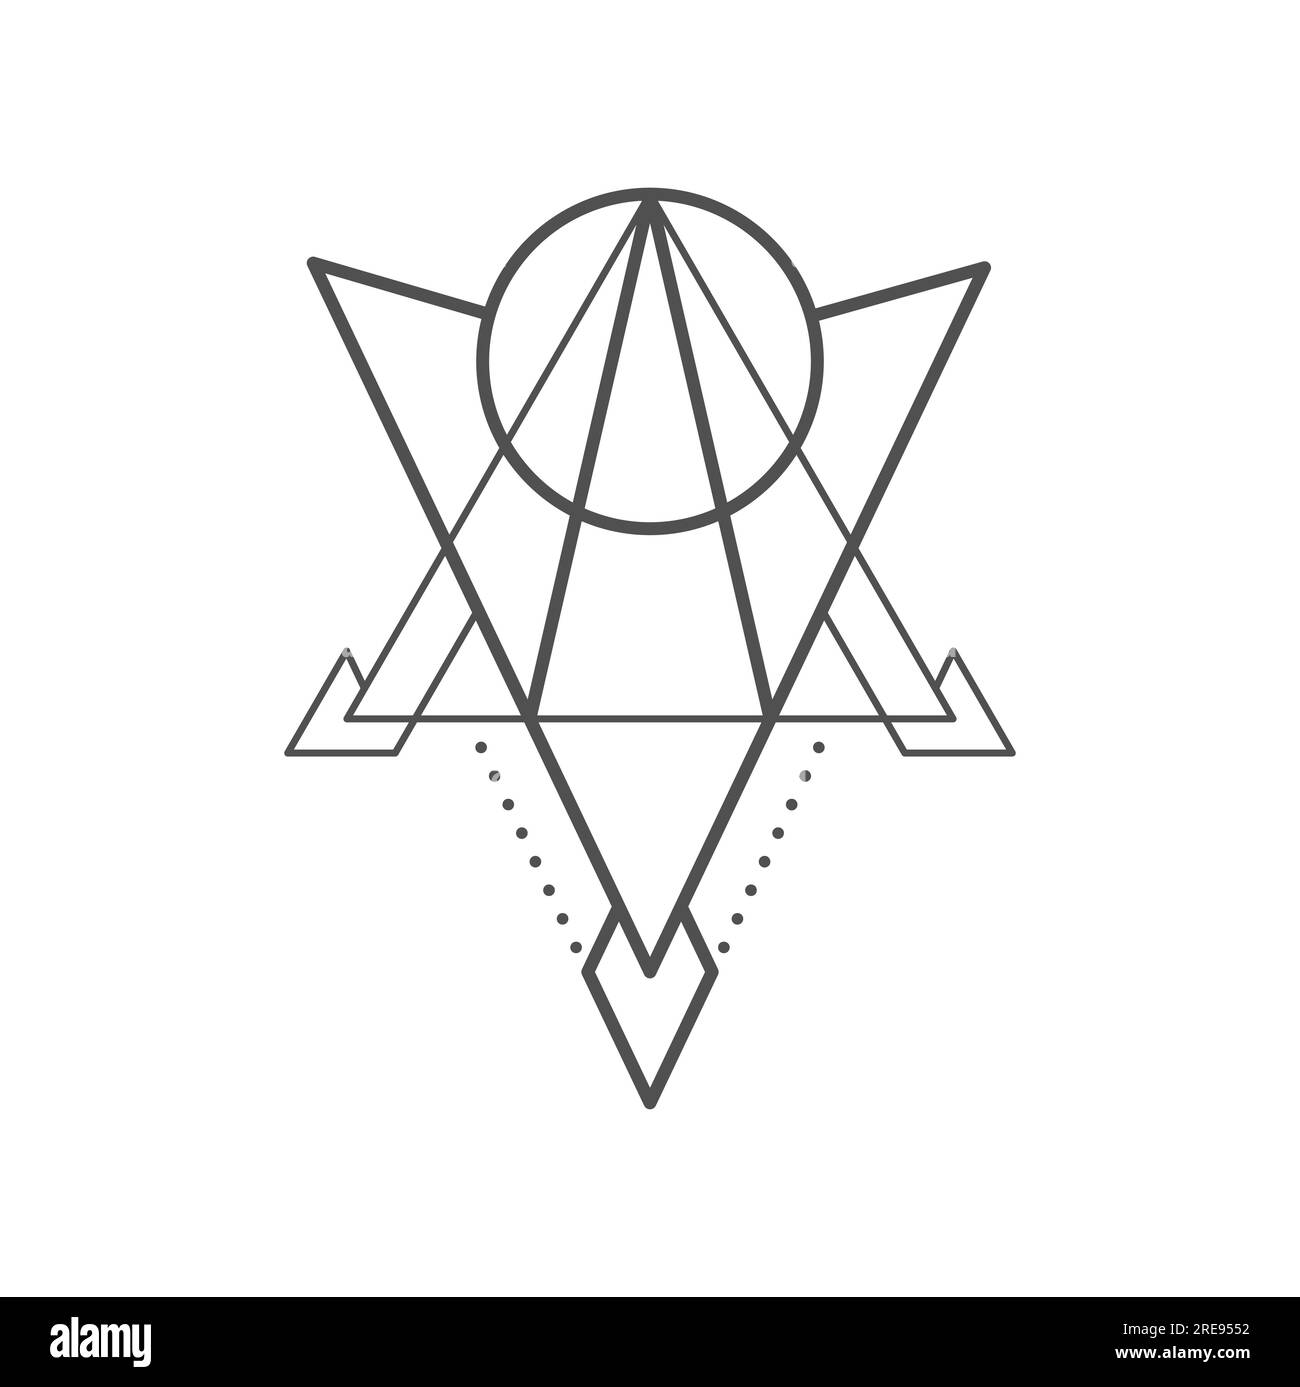 Abstract Geometric Symbol Logo Tattoo Design Vector Monochrome Illustration  Stock Illustration - Download Image Now - iStock